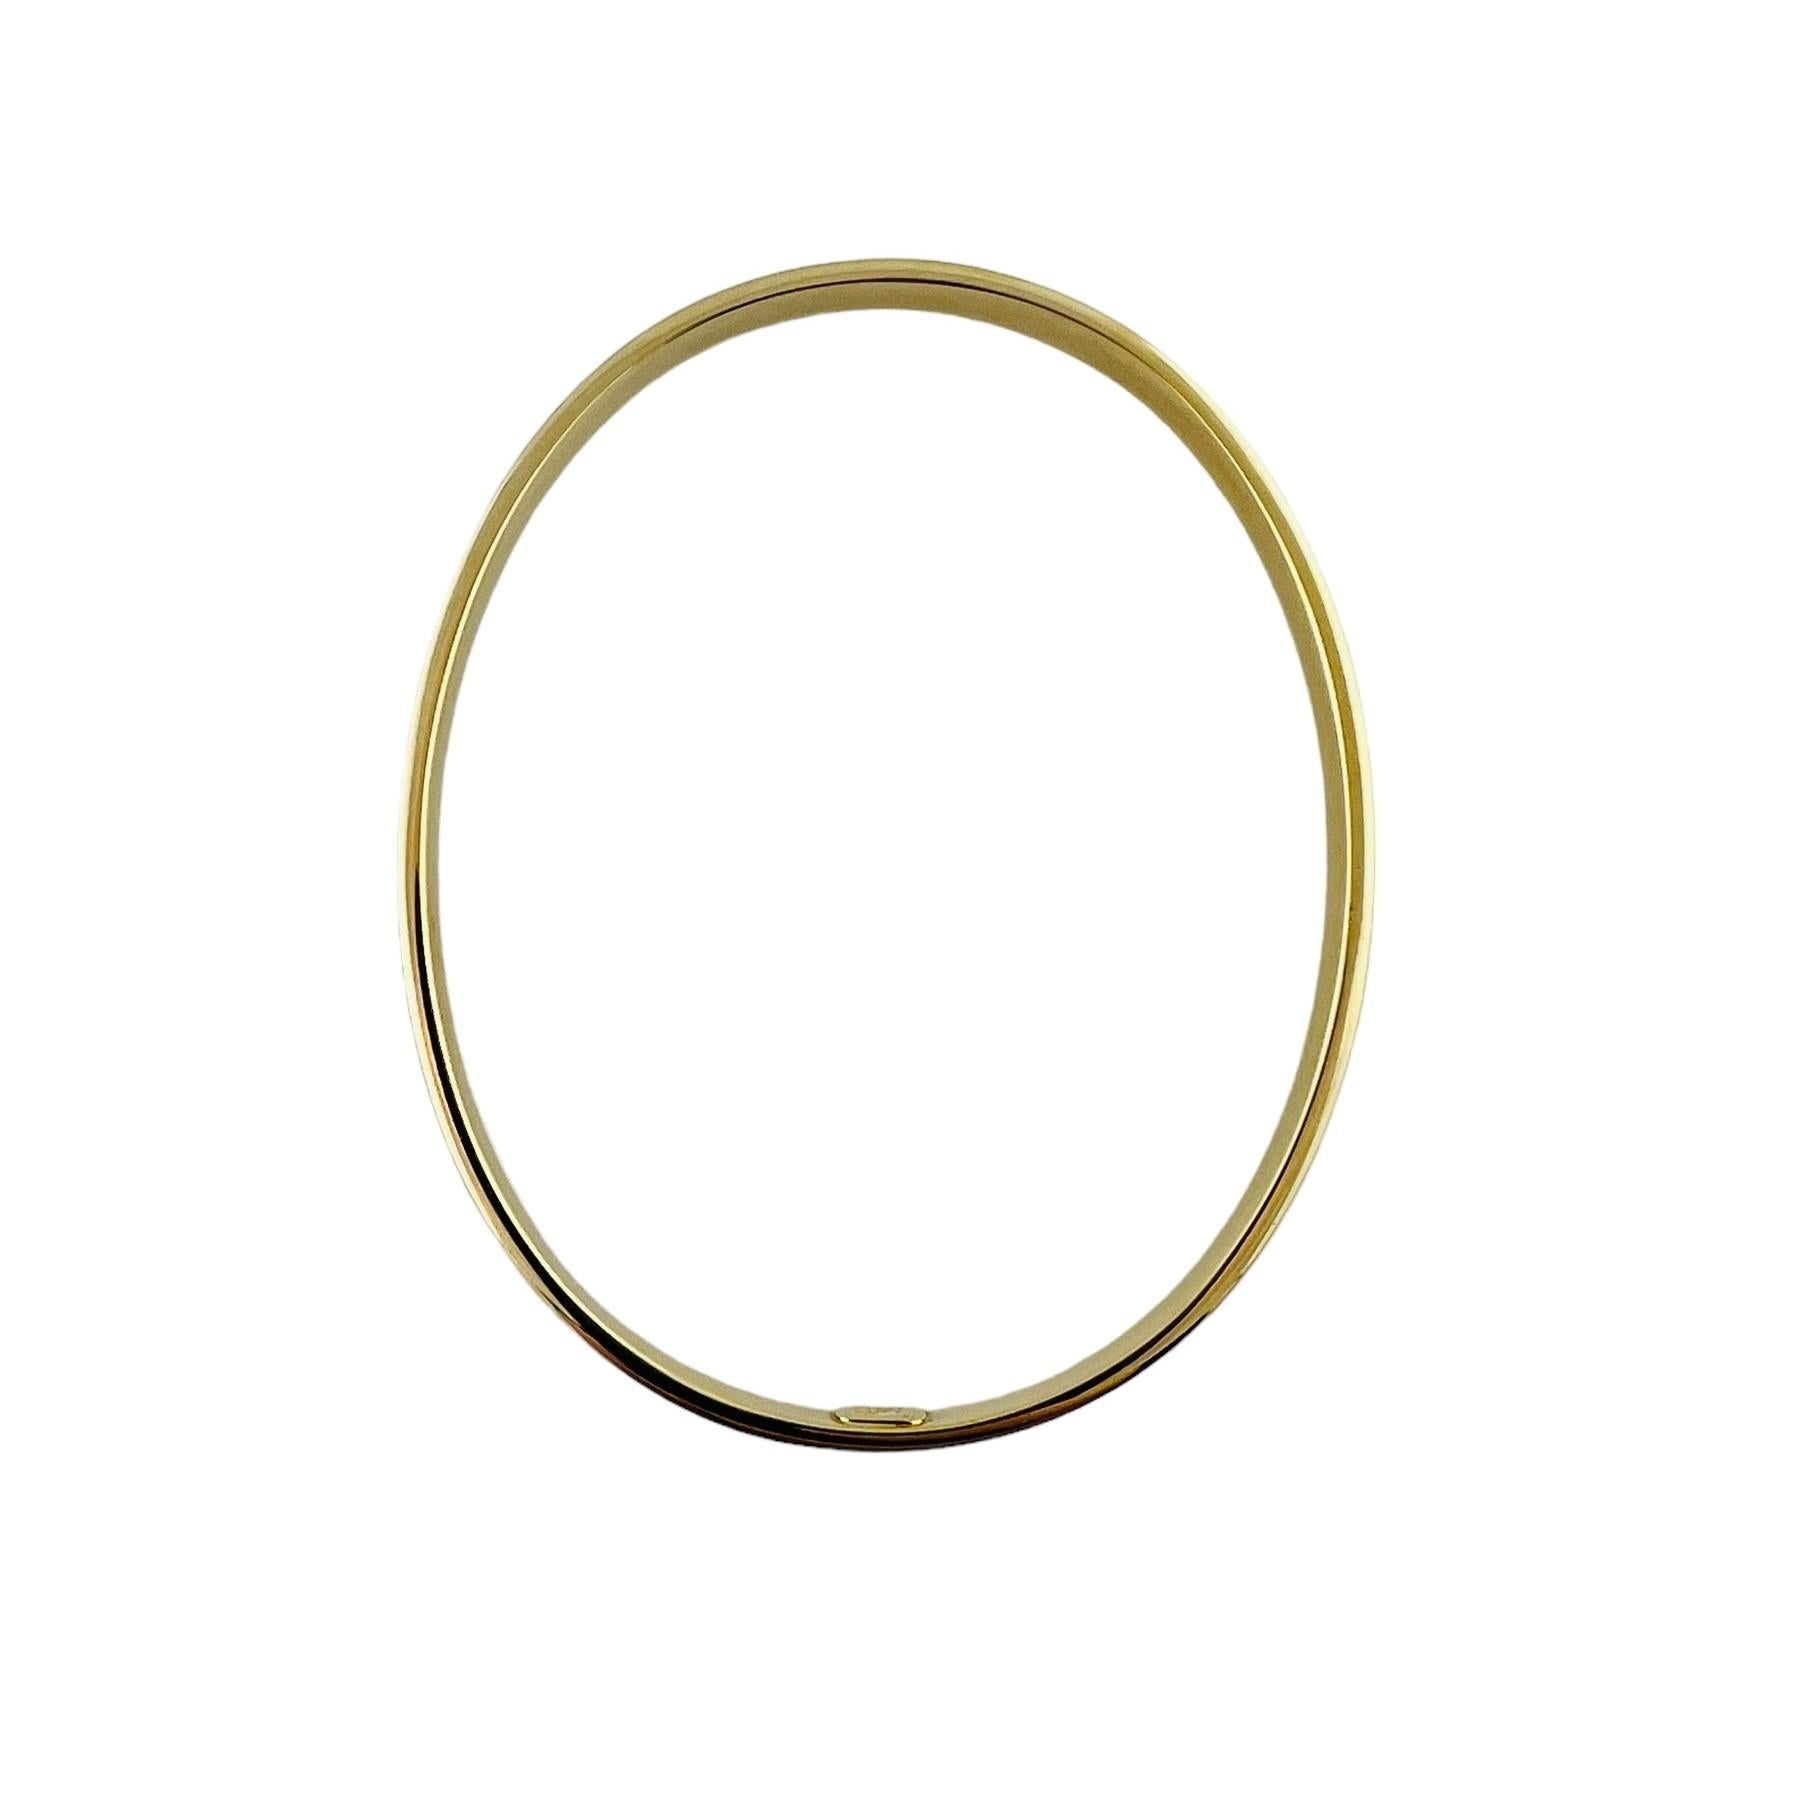 Tiffany & Co. 18K Yellow Gold Oval Bangle Bracelet #16675 1